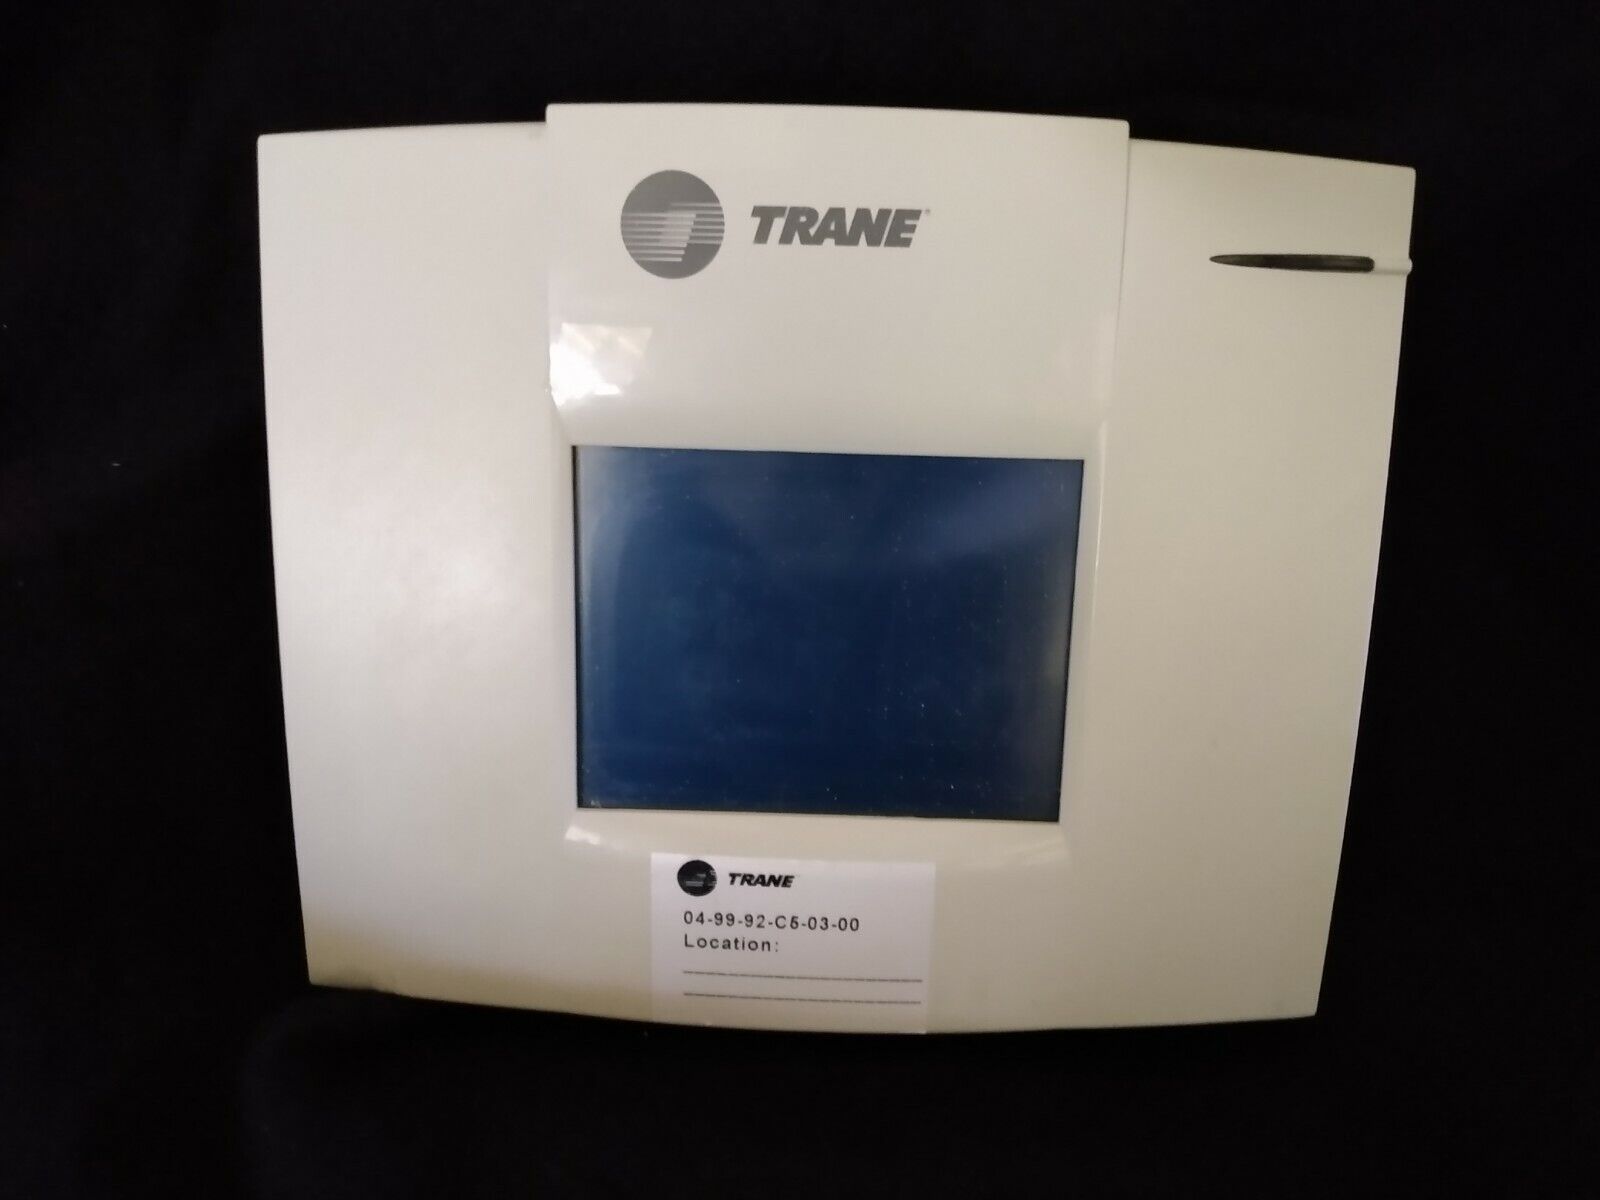 Trane VARITRAC CCPIII Touchscreen Display P/N 49500487